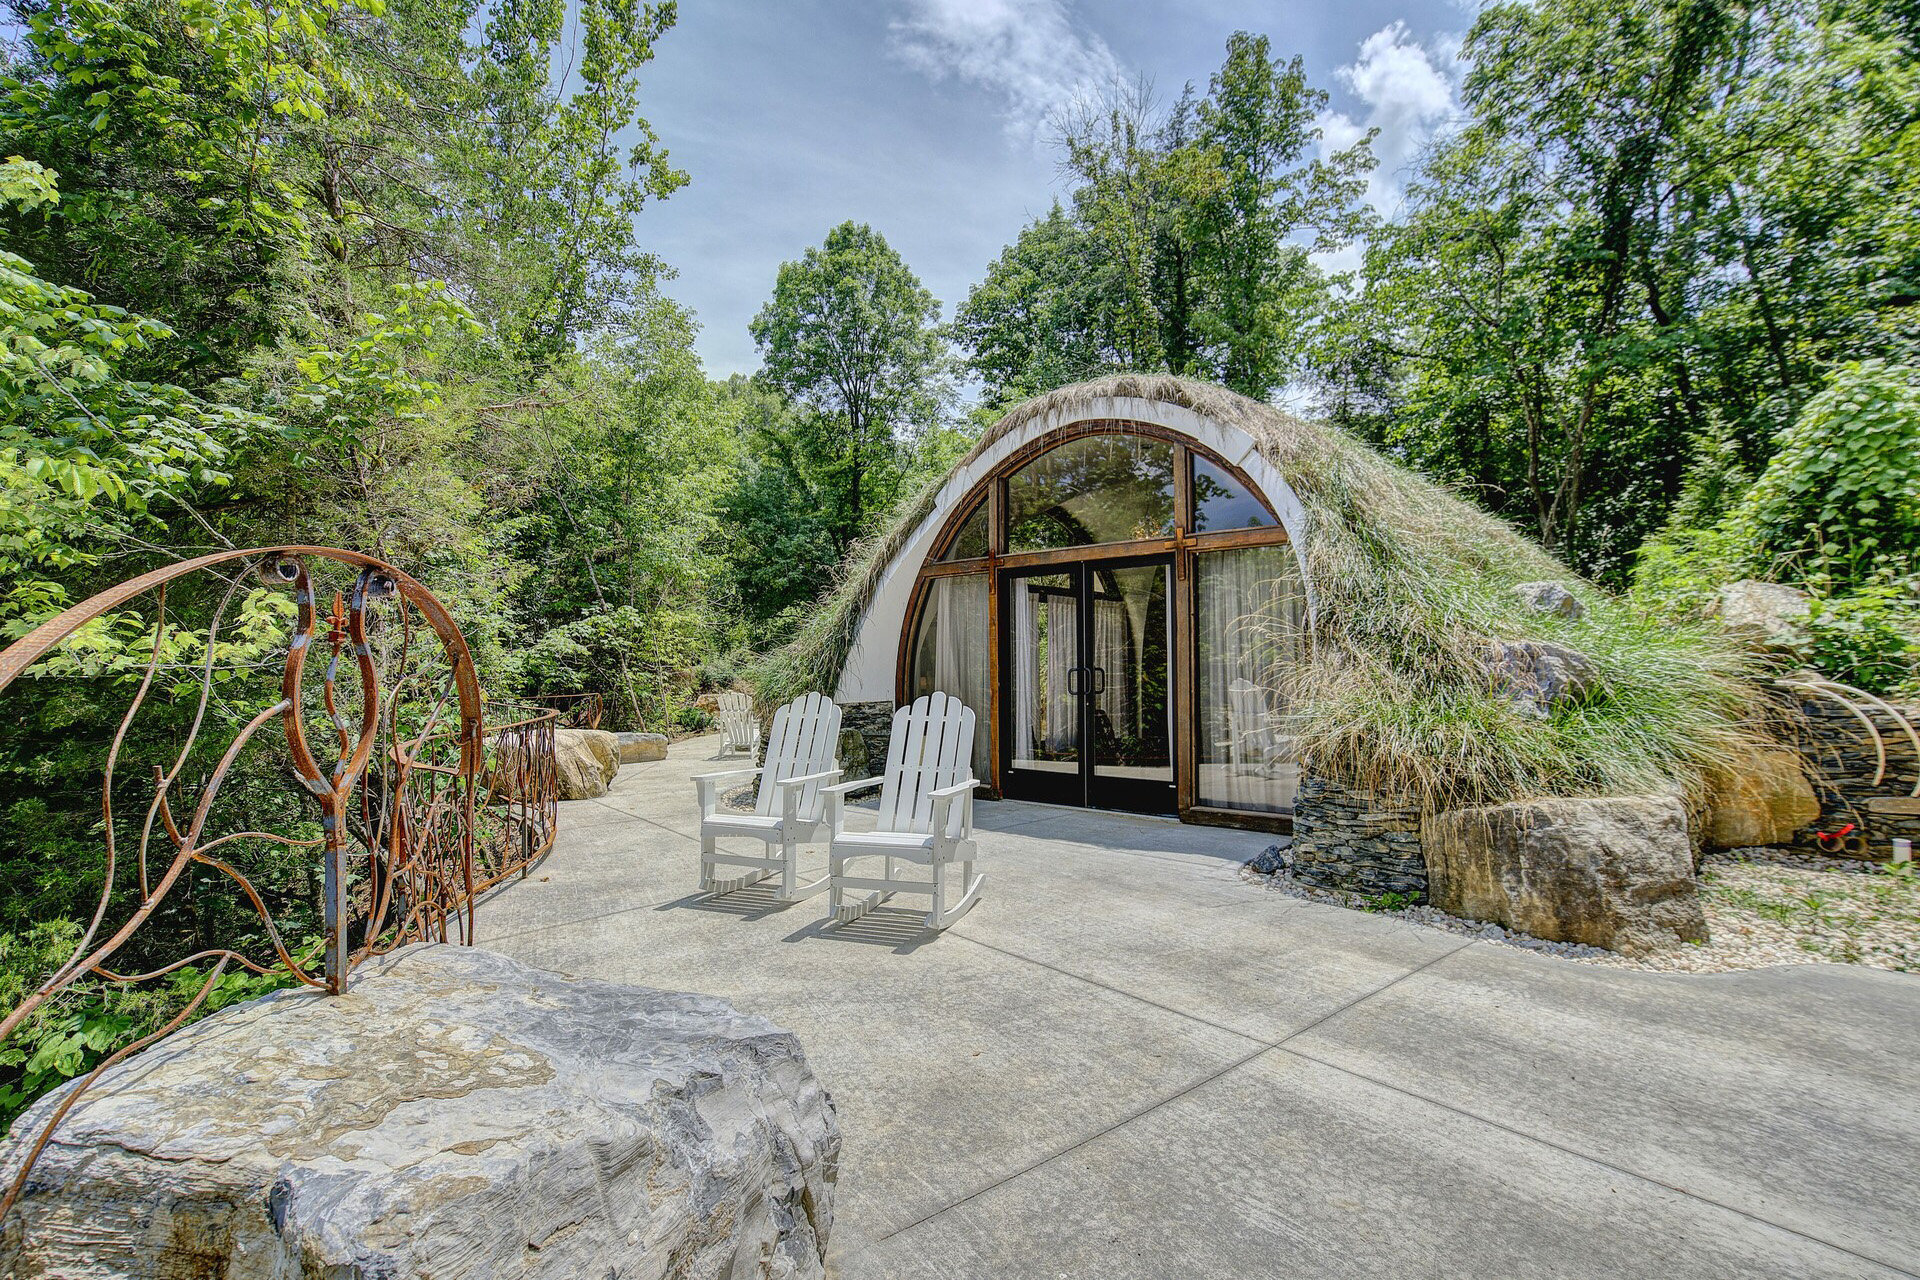 The Sassafras hobbit house – Tennessee, USA